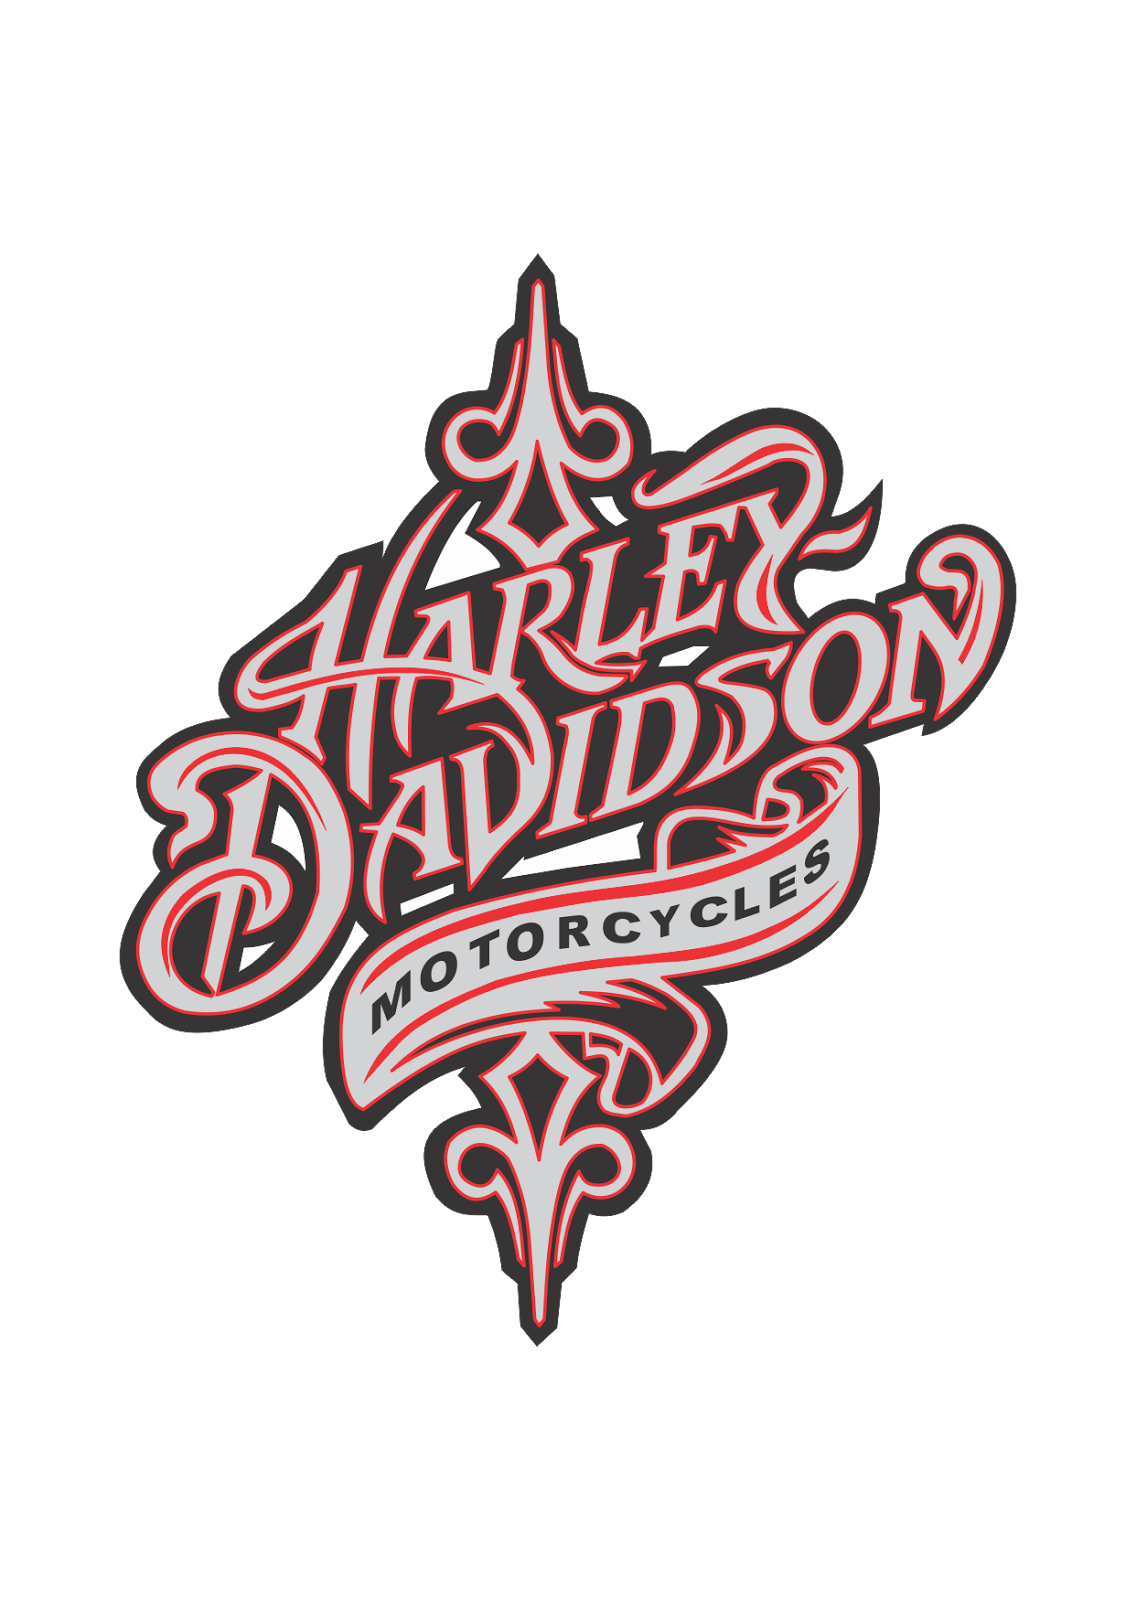 Harley davidson motorcycles Logo Vector (Motorcycle company)~ Format